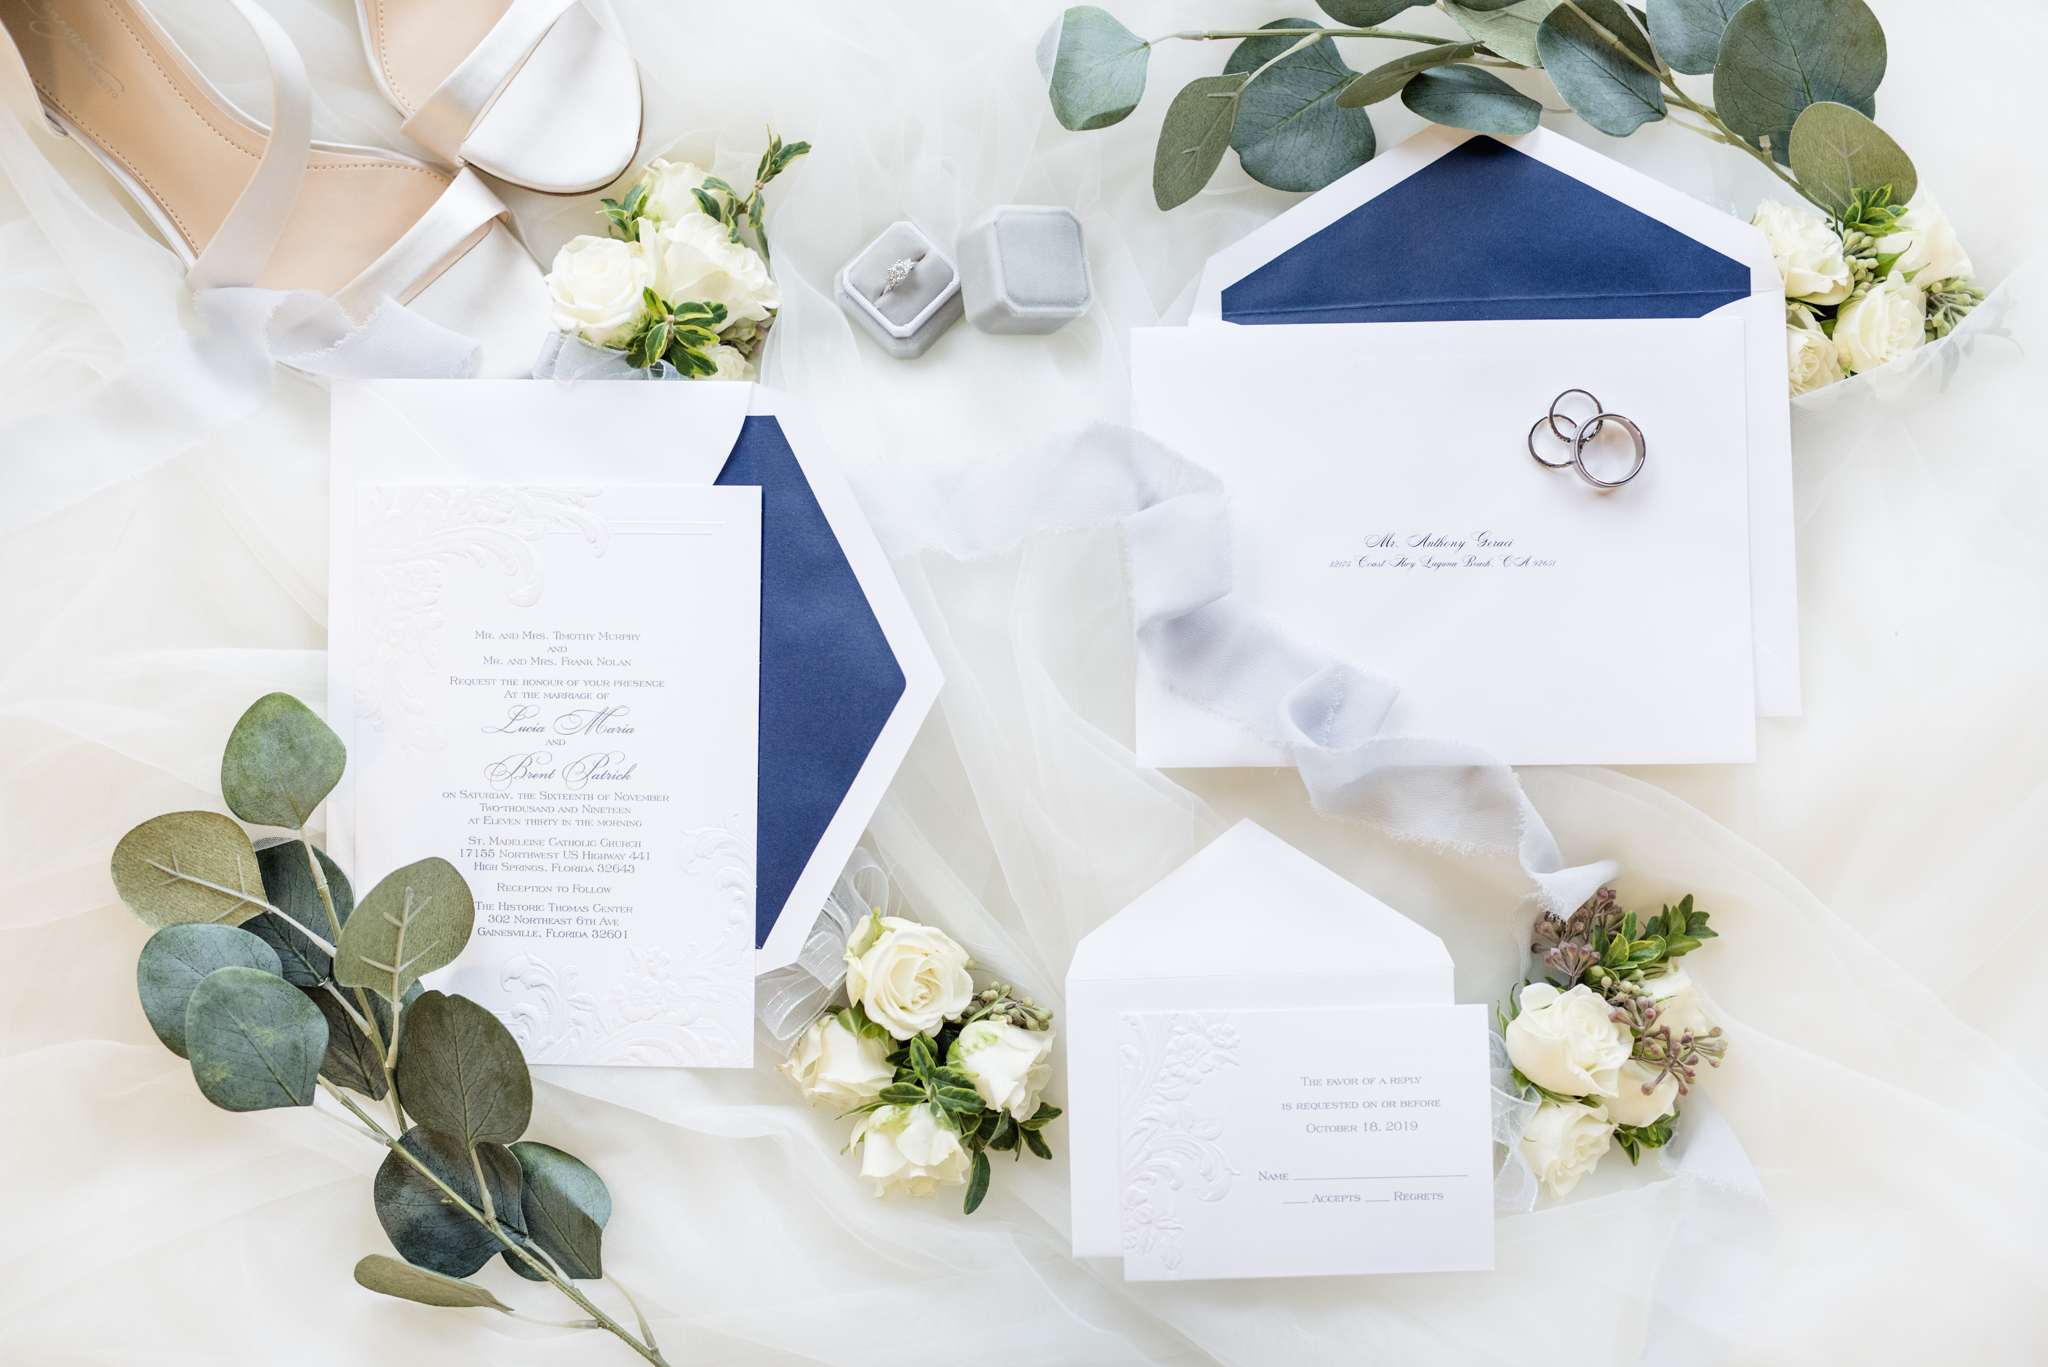 Wedding invitations and ribbon.